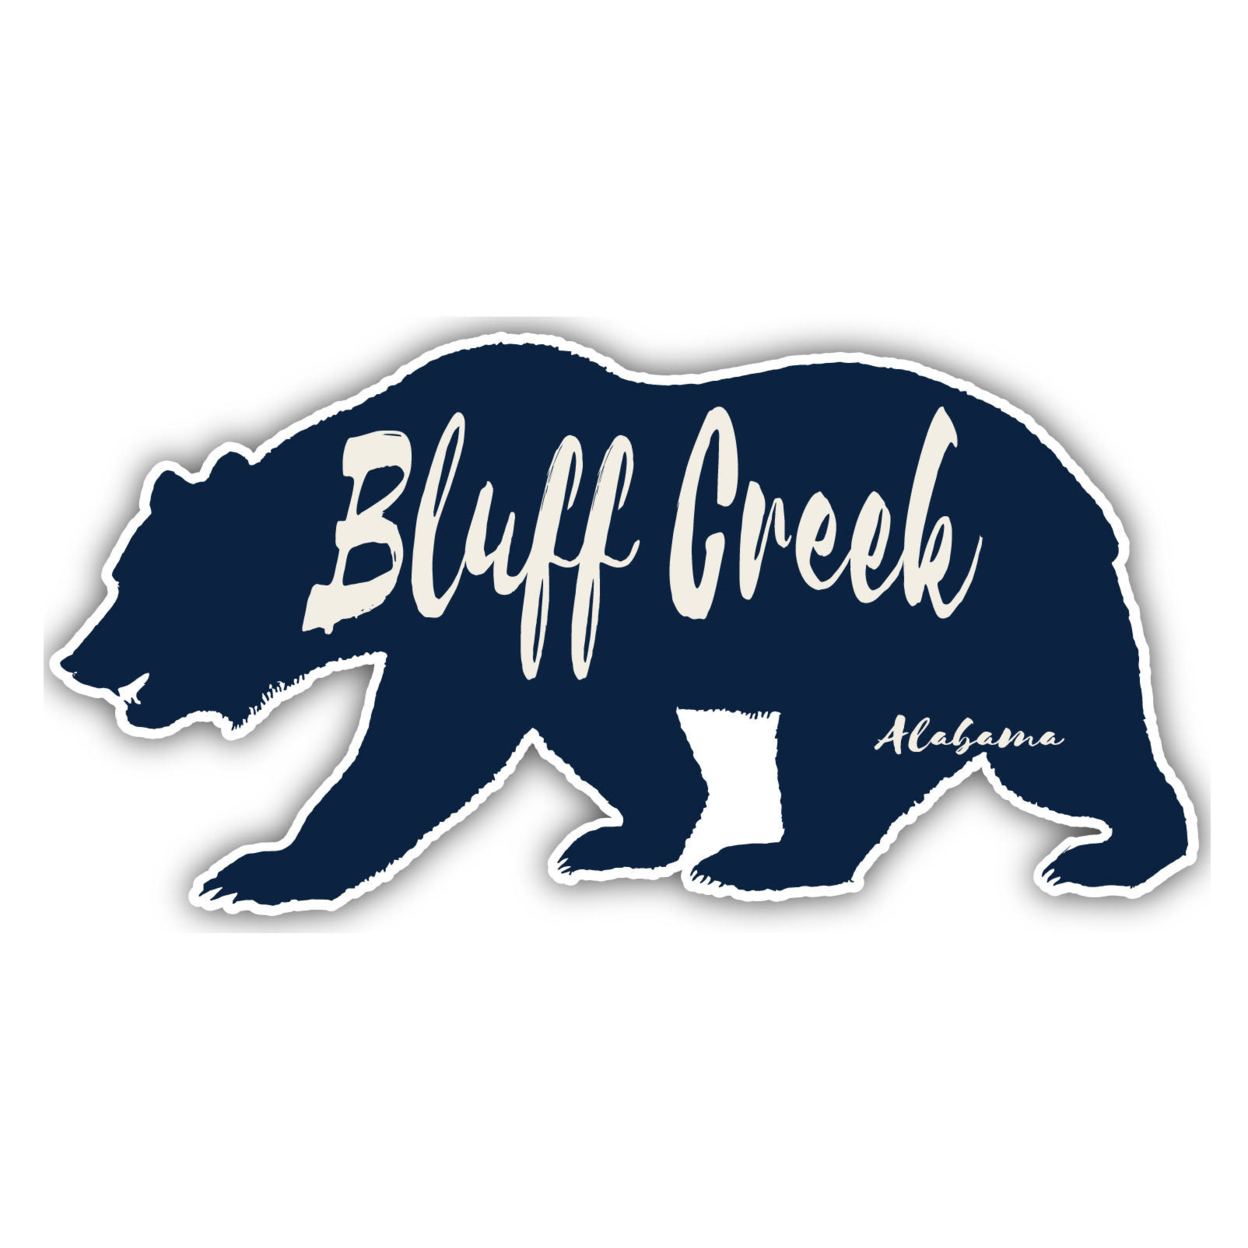 Bluff Creek Alabama Souvenir Decorative Stickers (Choose Theme And Size) - 4-Pack, 12-Inch, Bear